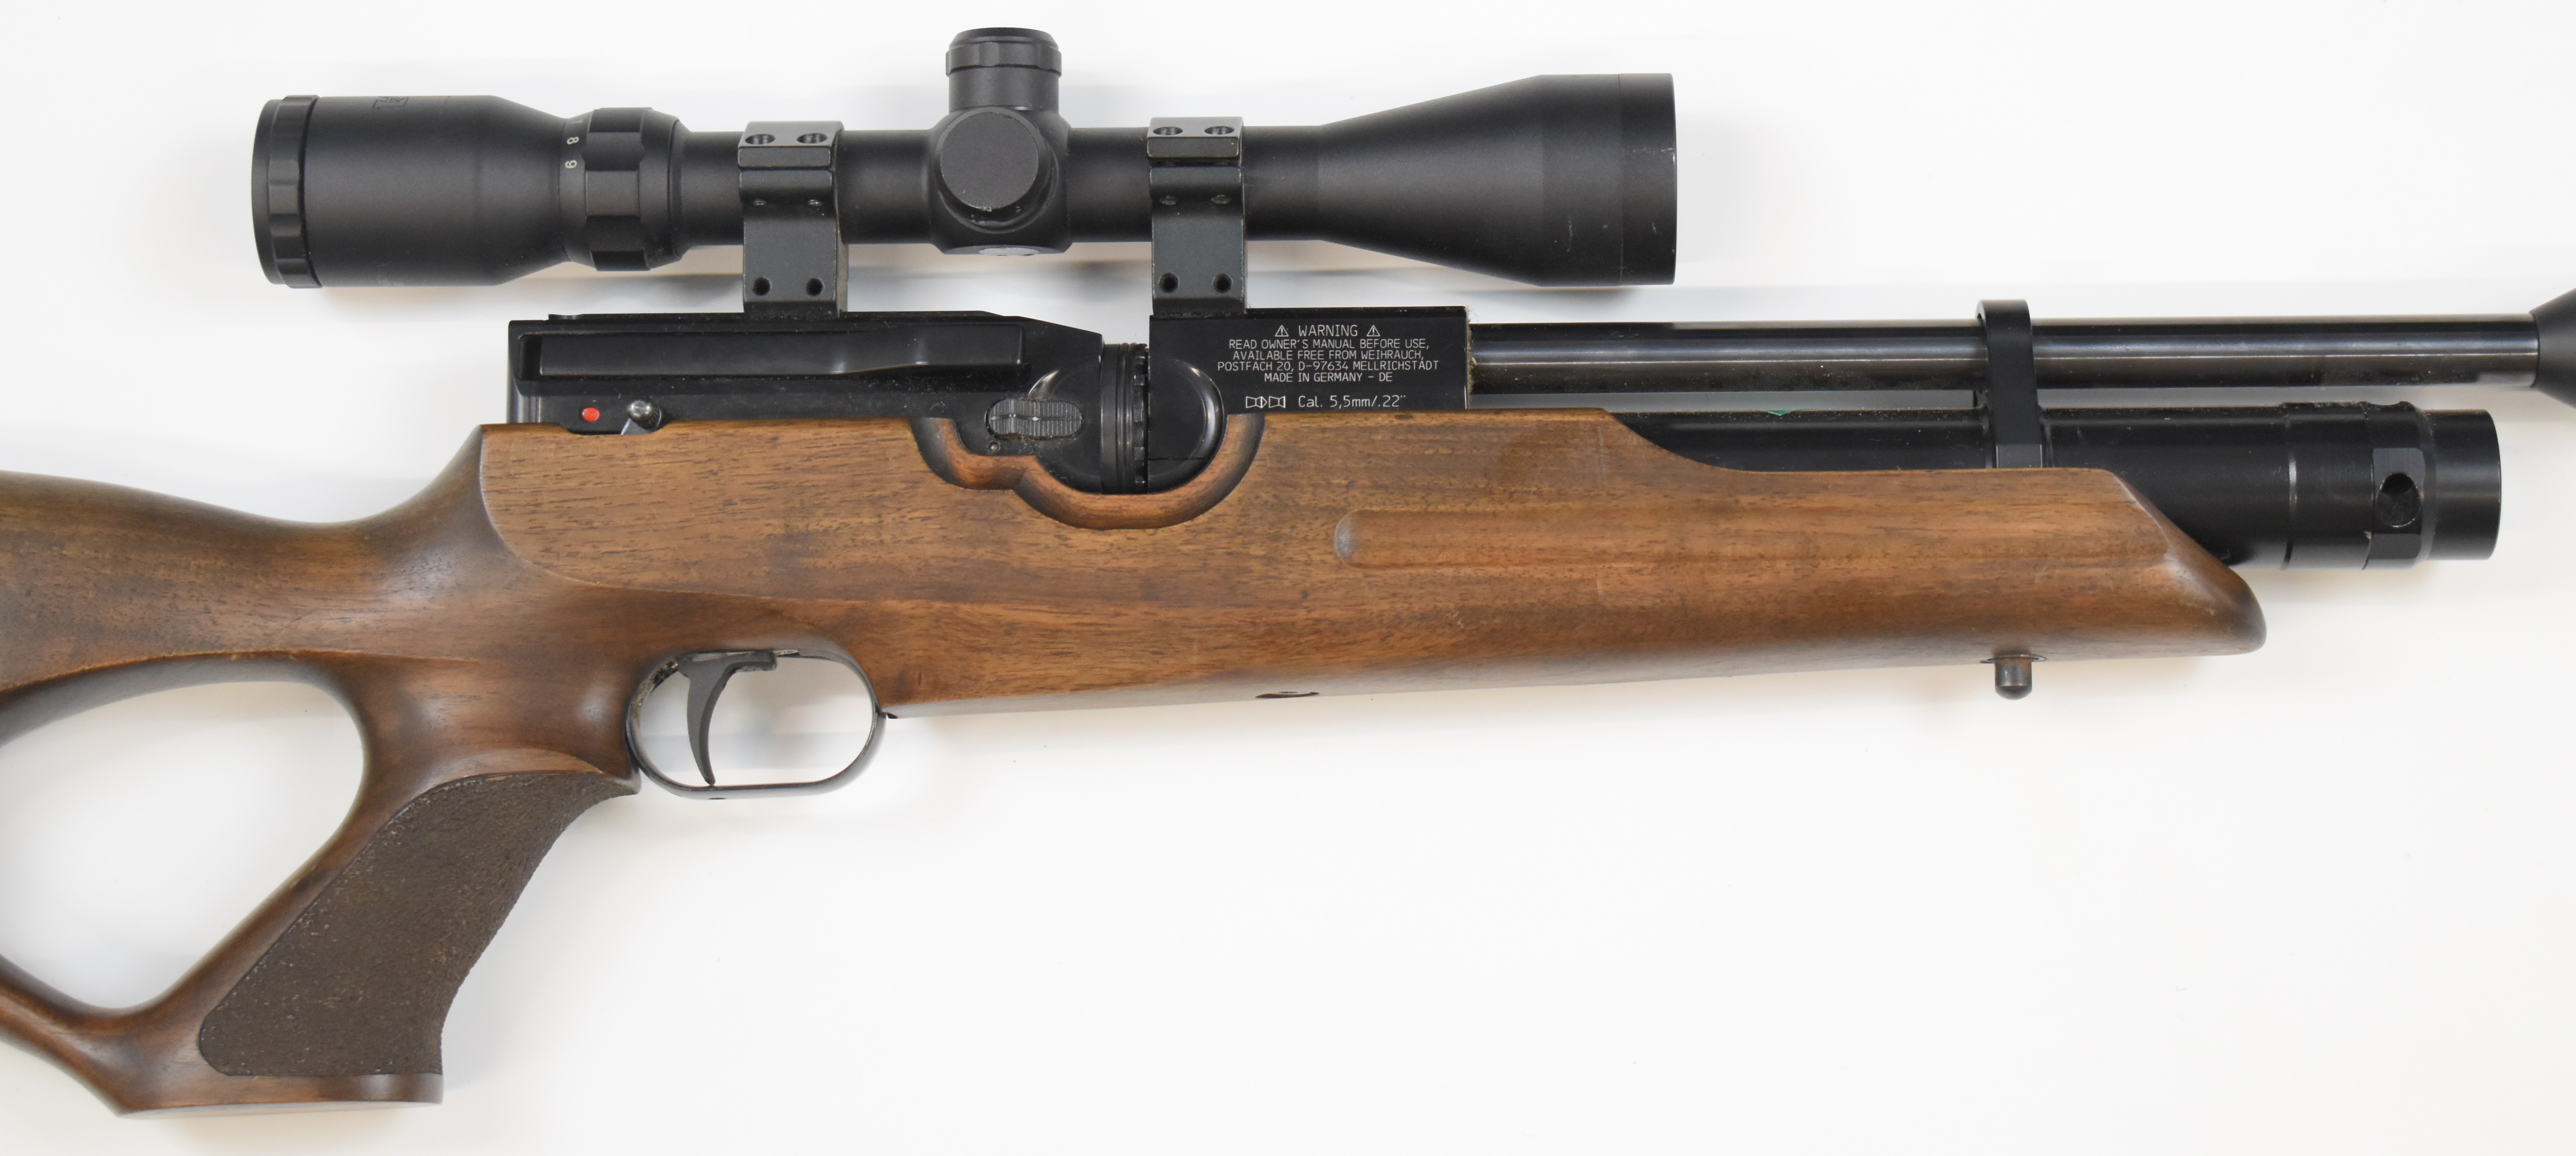 Weihrauch HW100 .22 PCP air rifle with textured semi-pistol grip, raised cheek piece, adjustable - Image 4 of 11